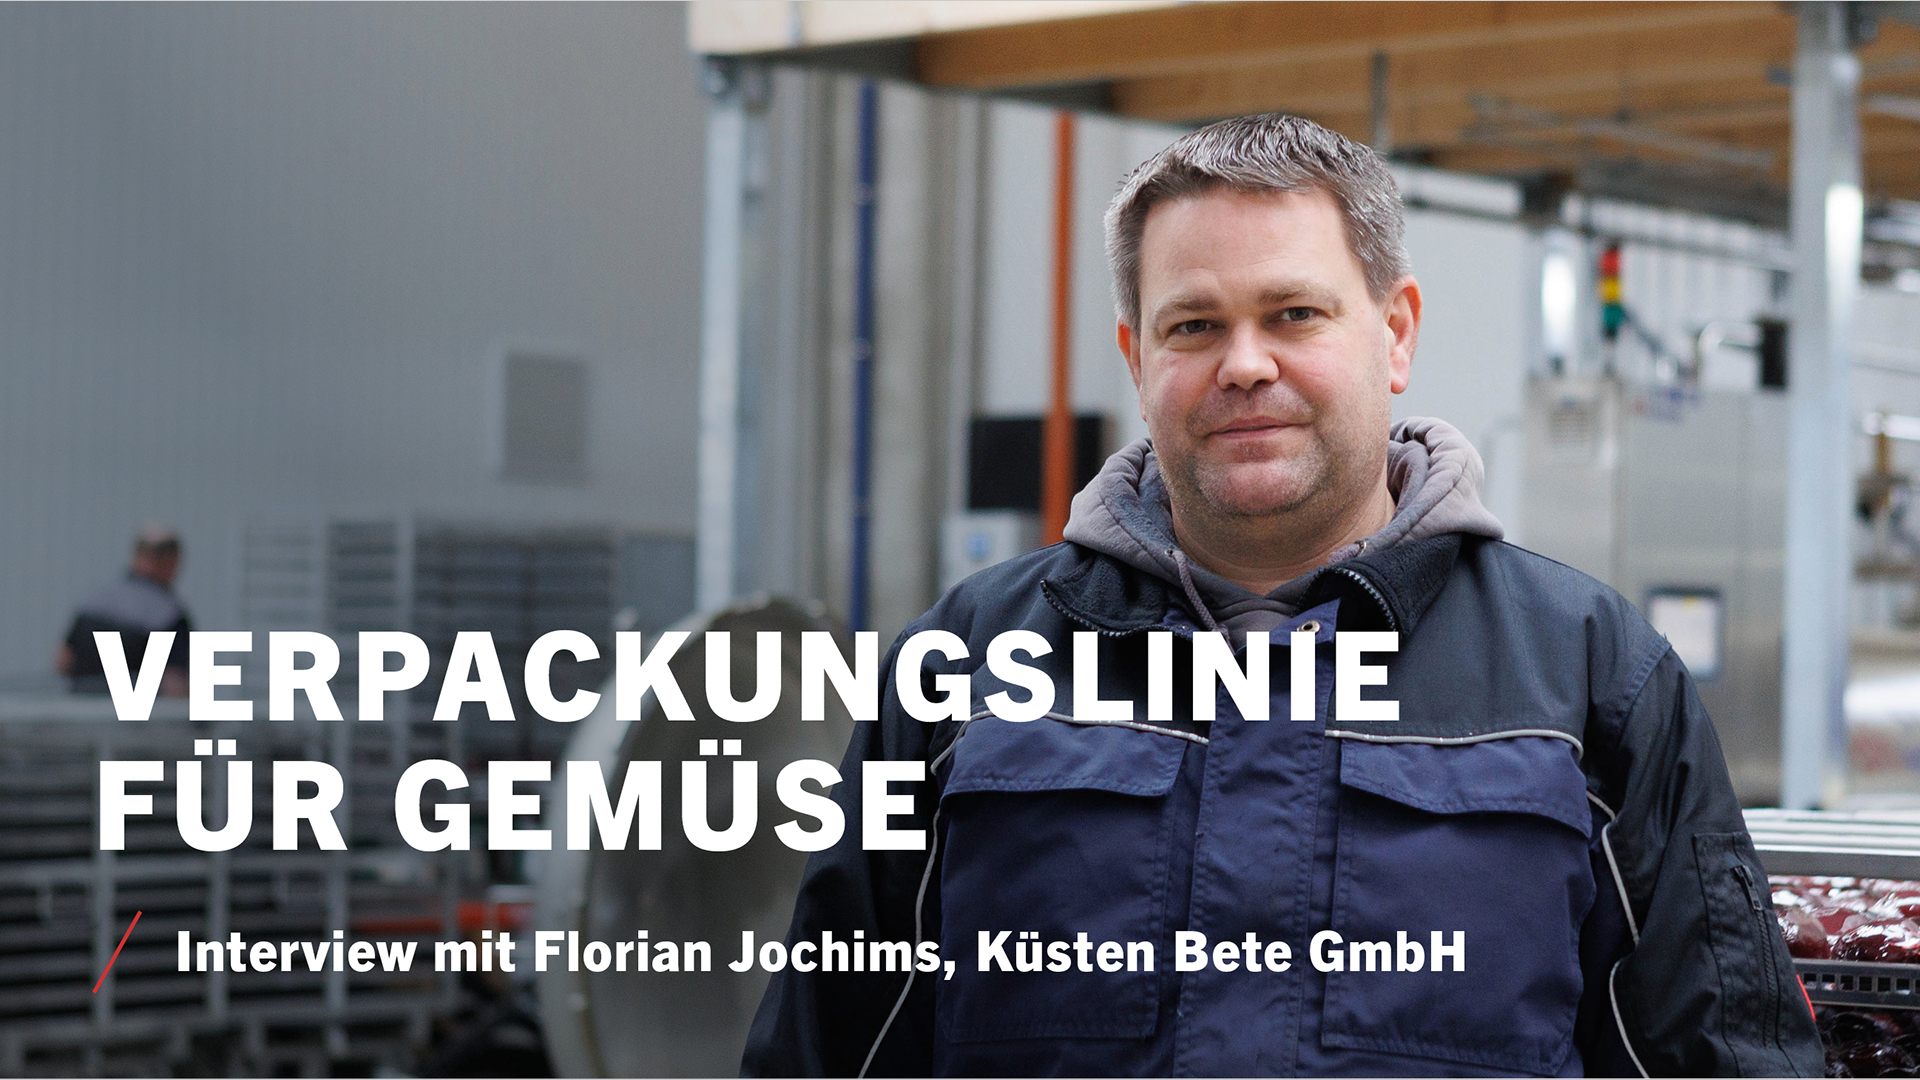 Florian Joachims, Geschäftsführer der Küsten Bete GmbH